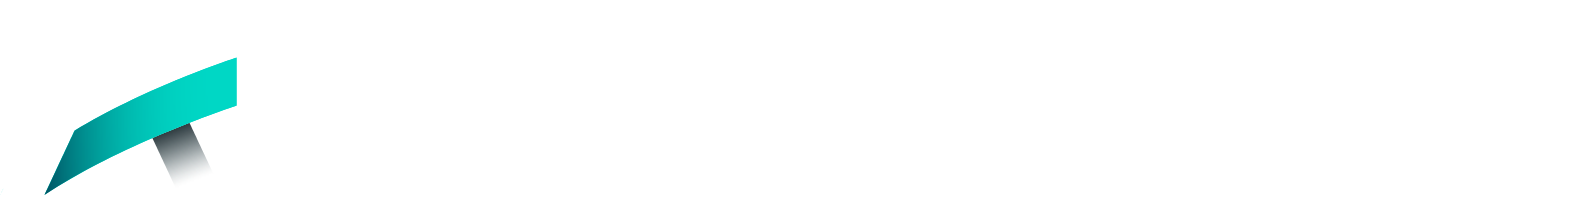 Akerna Logo groß für dunkle Hintergründe (transparentes PNG)